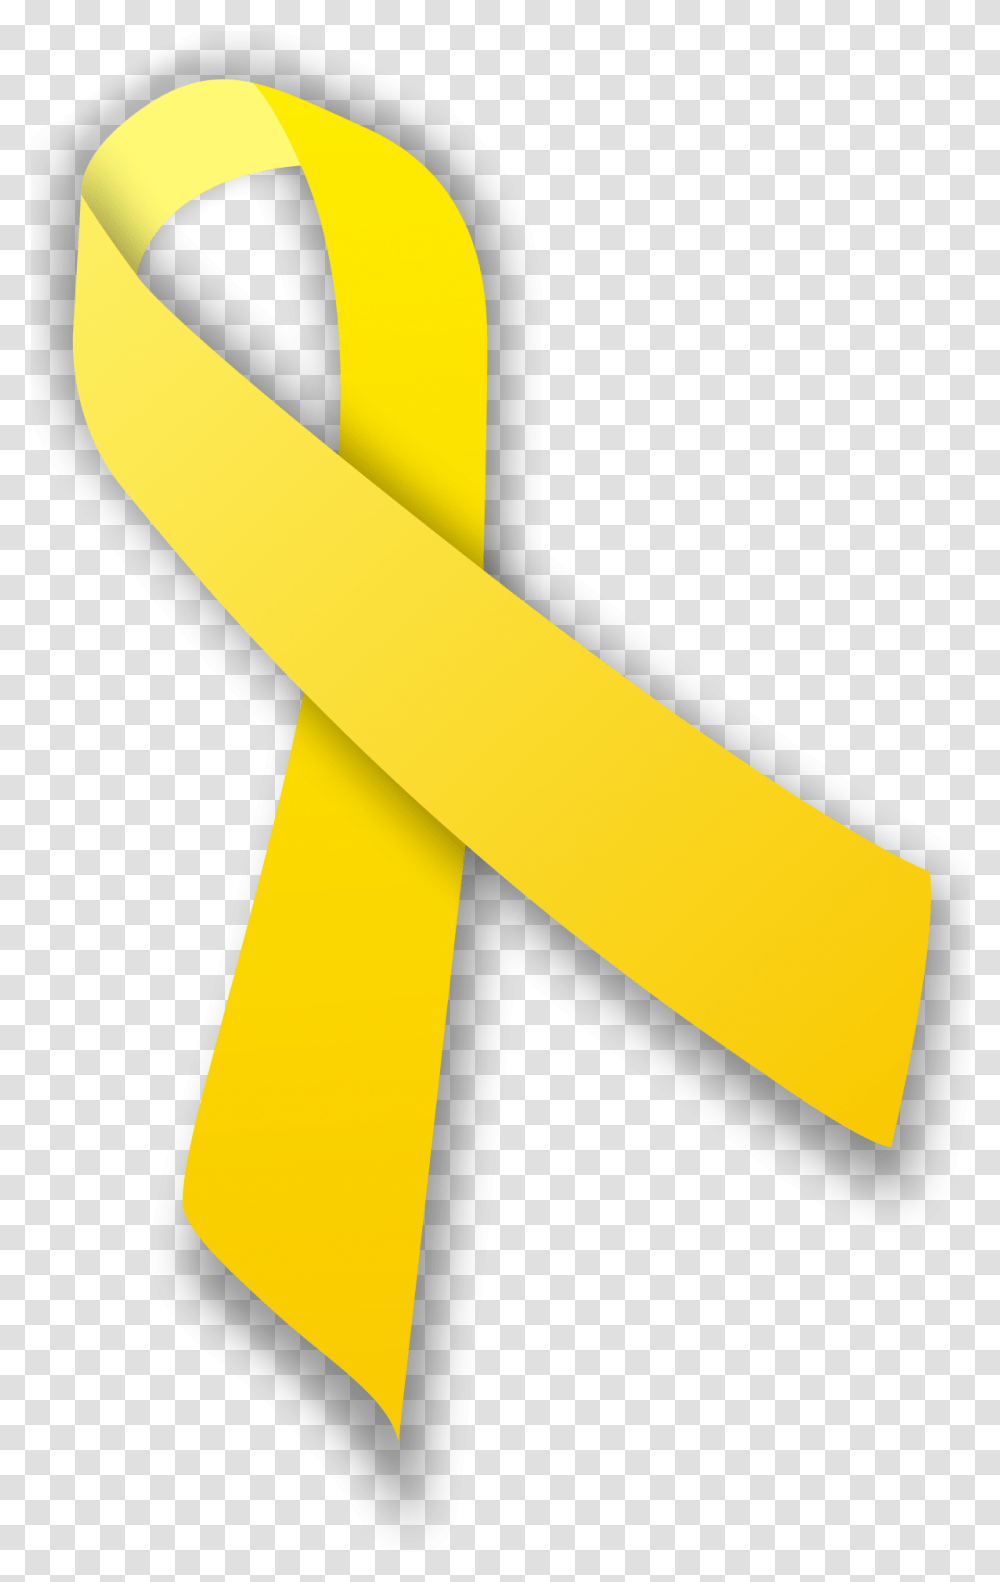 2014 Hong Kong Class Boycott Campaign Wikipedia Yellow Spina Bifida Ribbon, Axe, Tool, Hammer Transparent Png